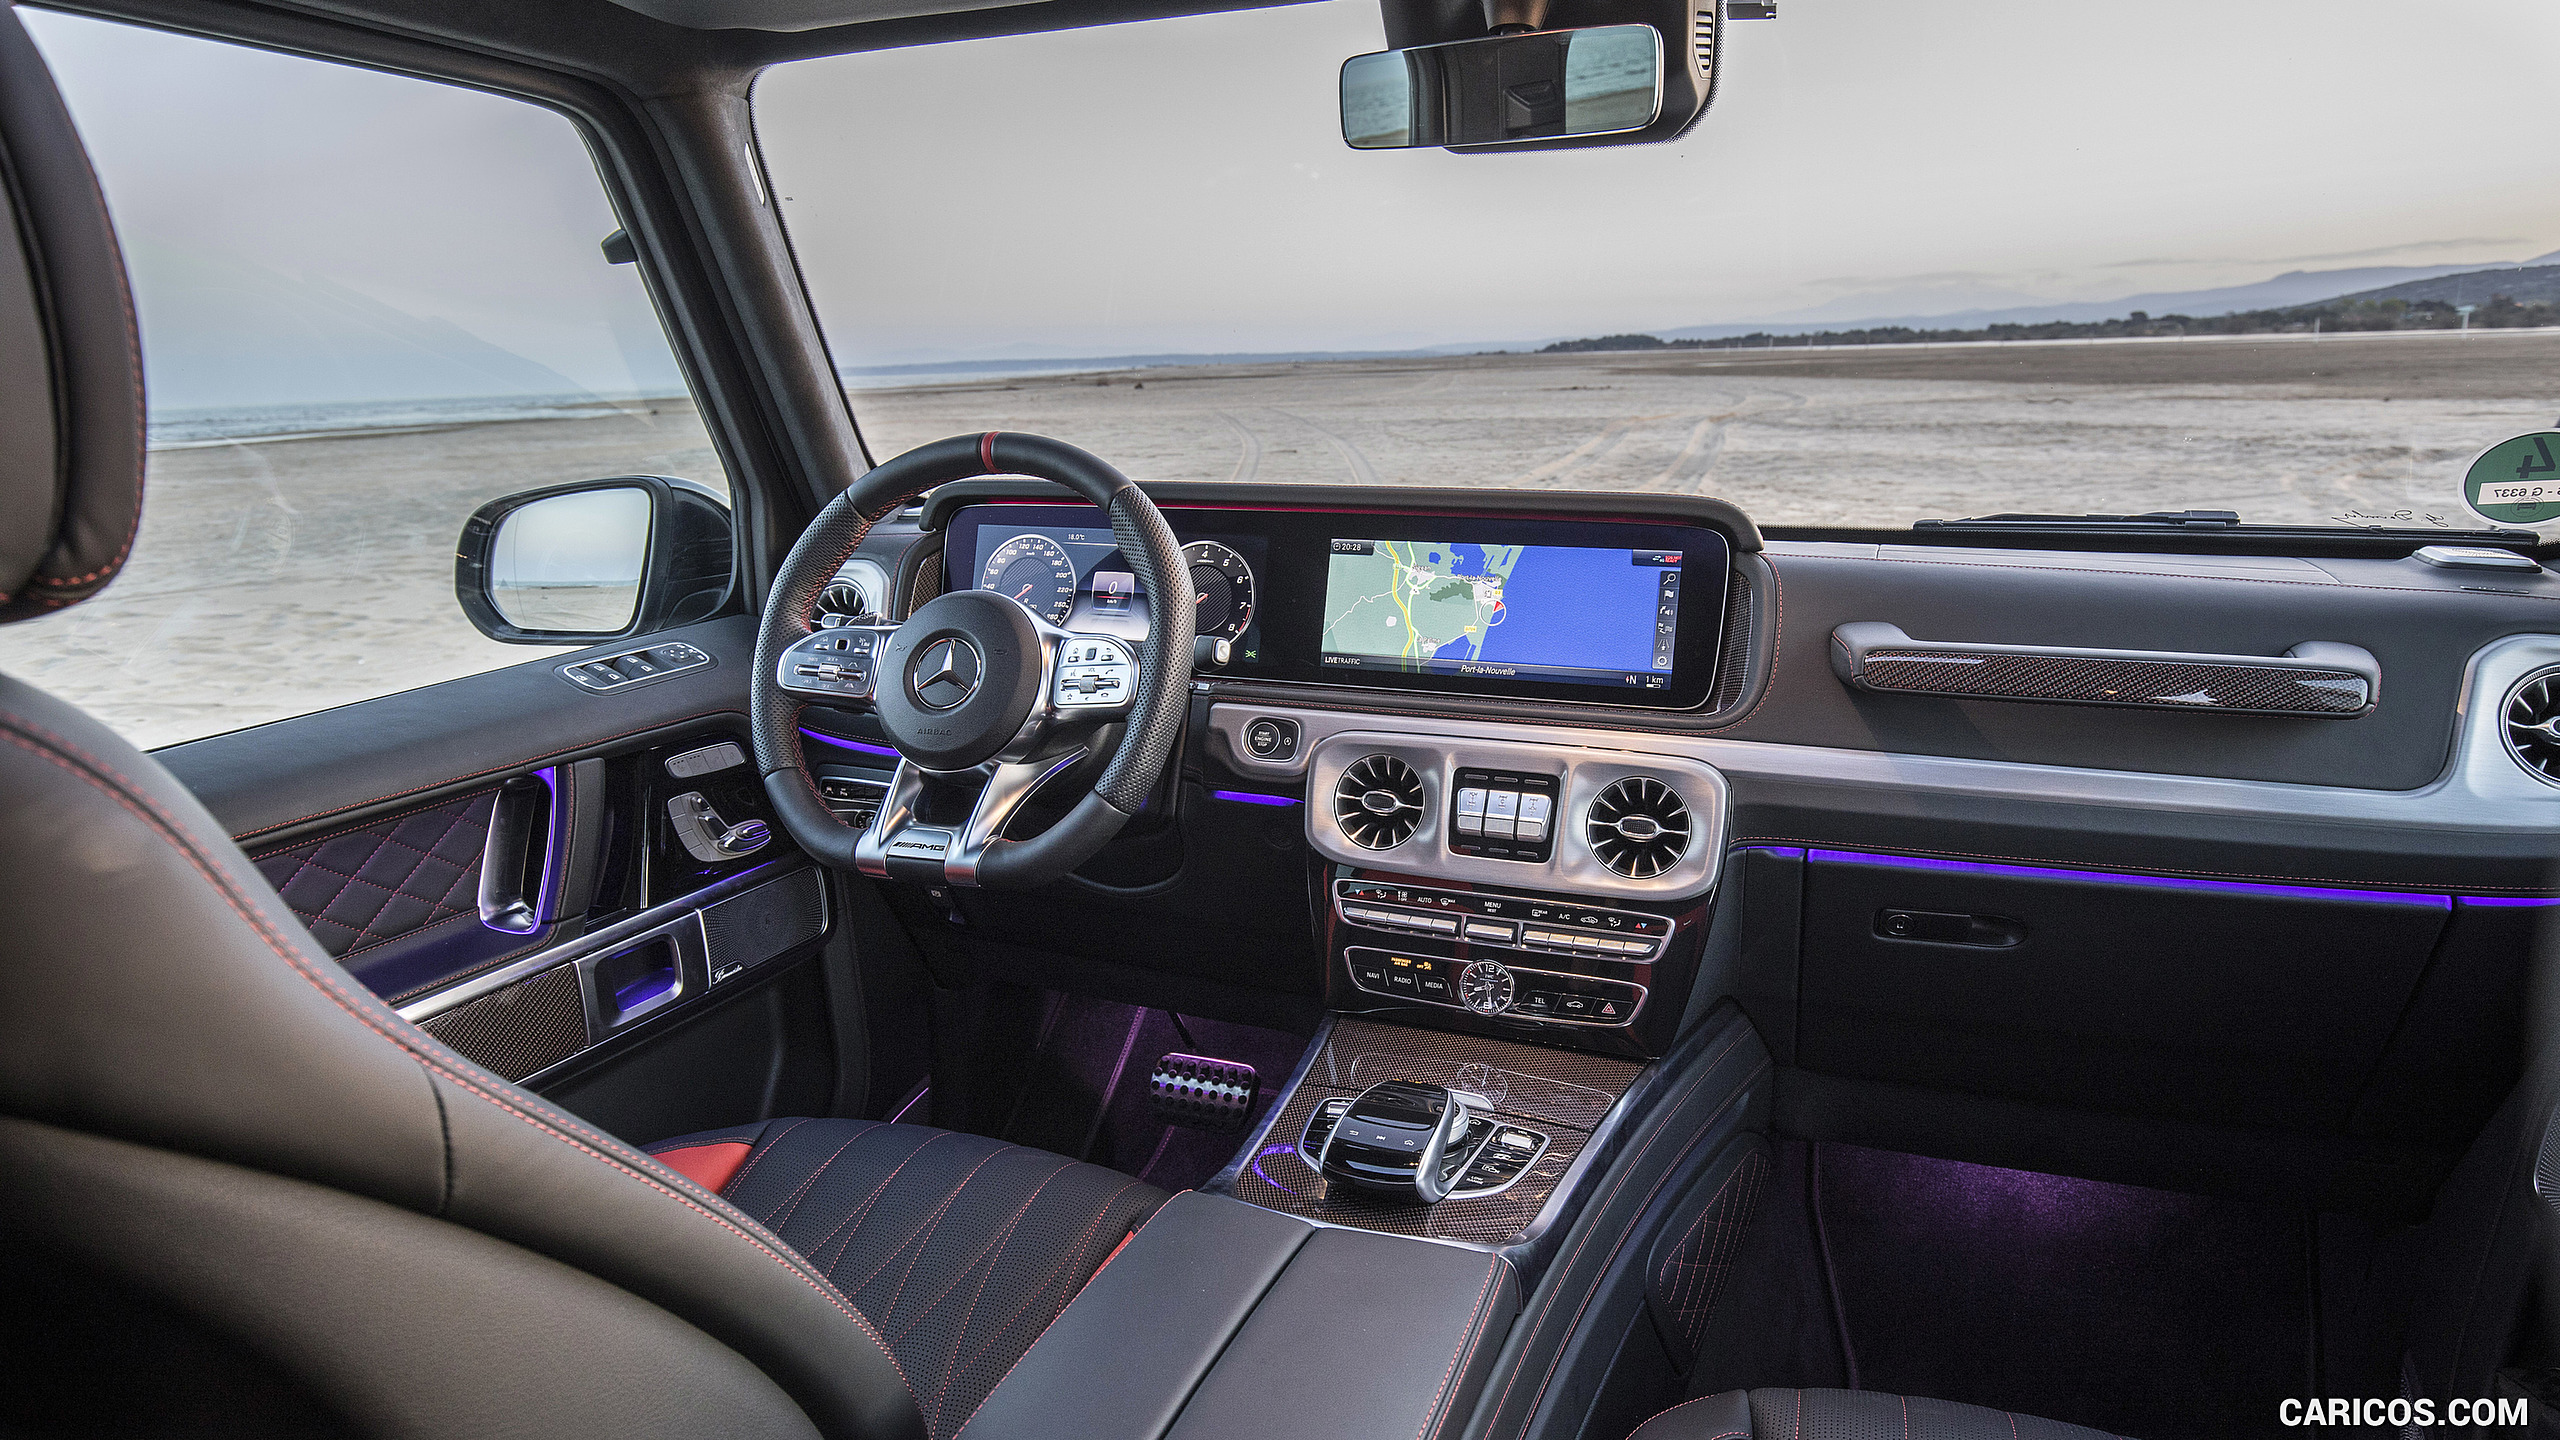 2019 Mercedes-AMG G63 - Interior, Cockpit, #203 of 452